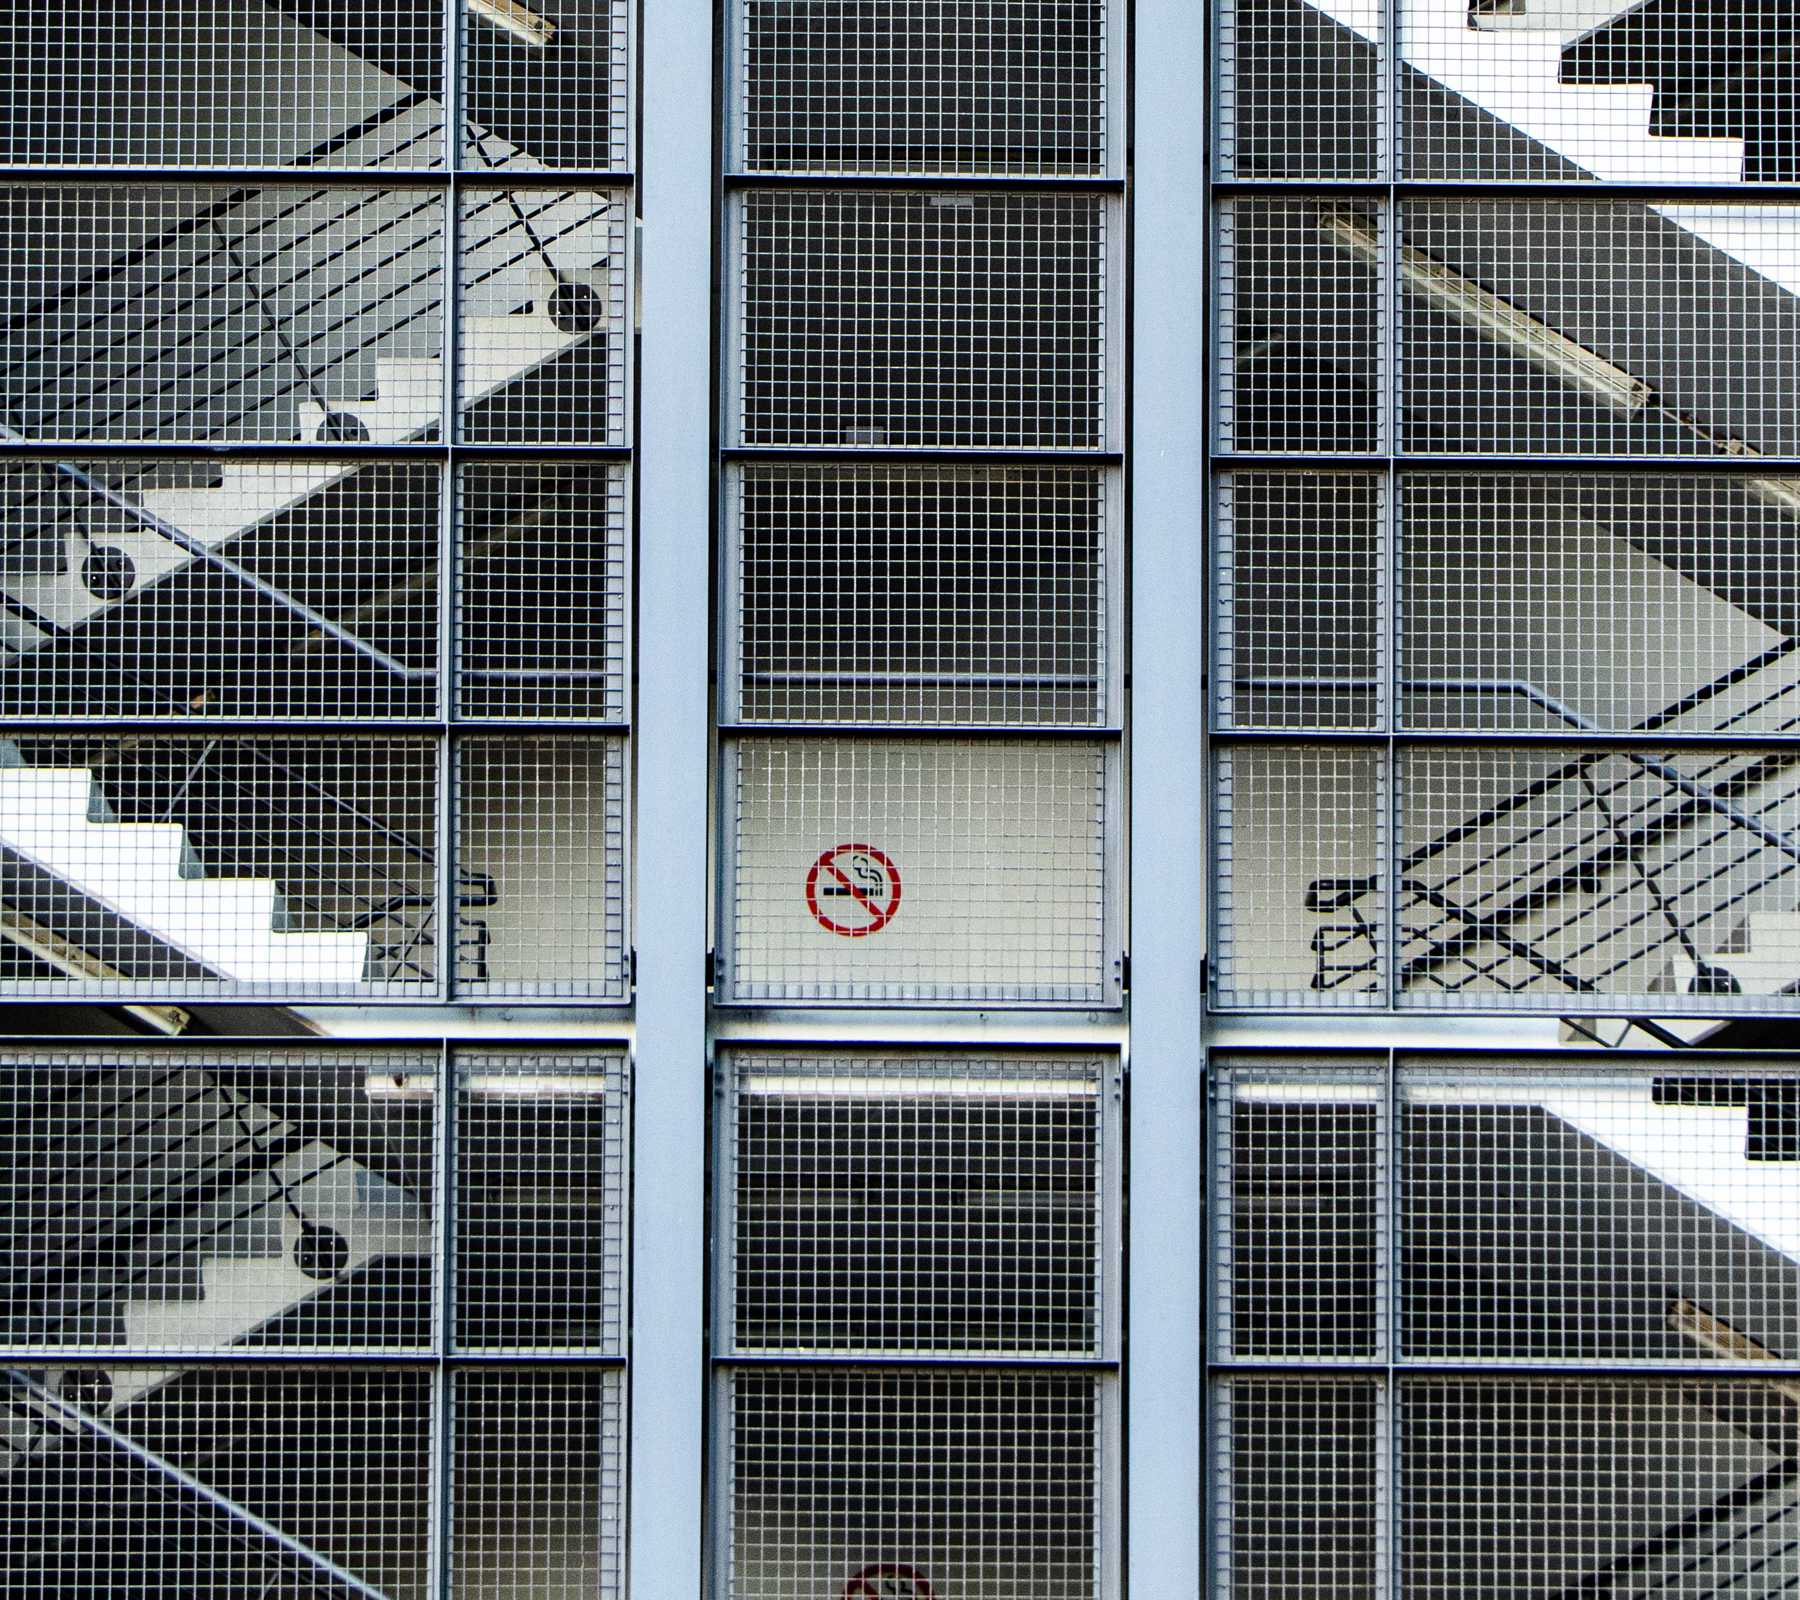 Prison stairwells behind fencing